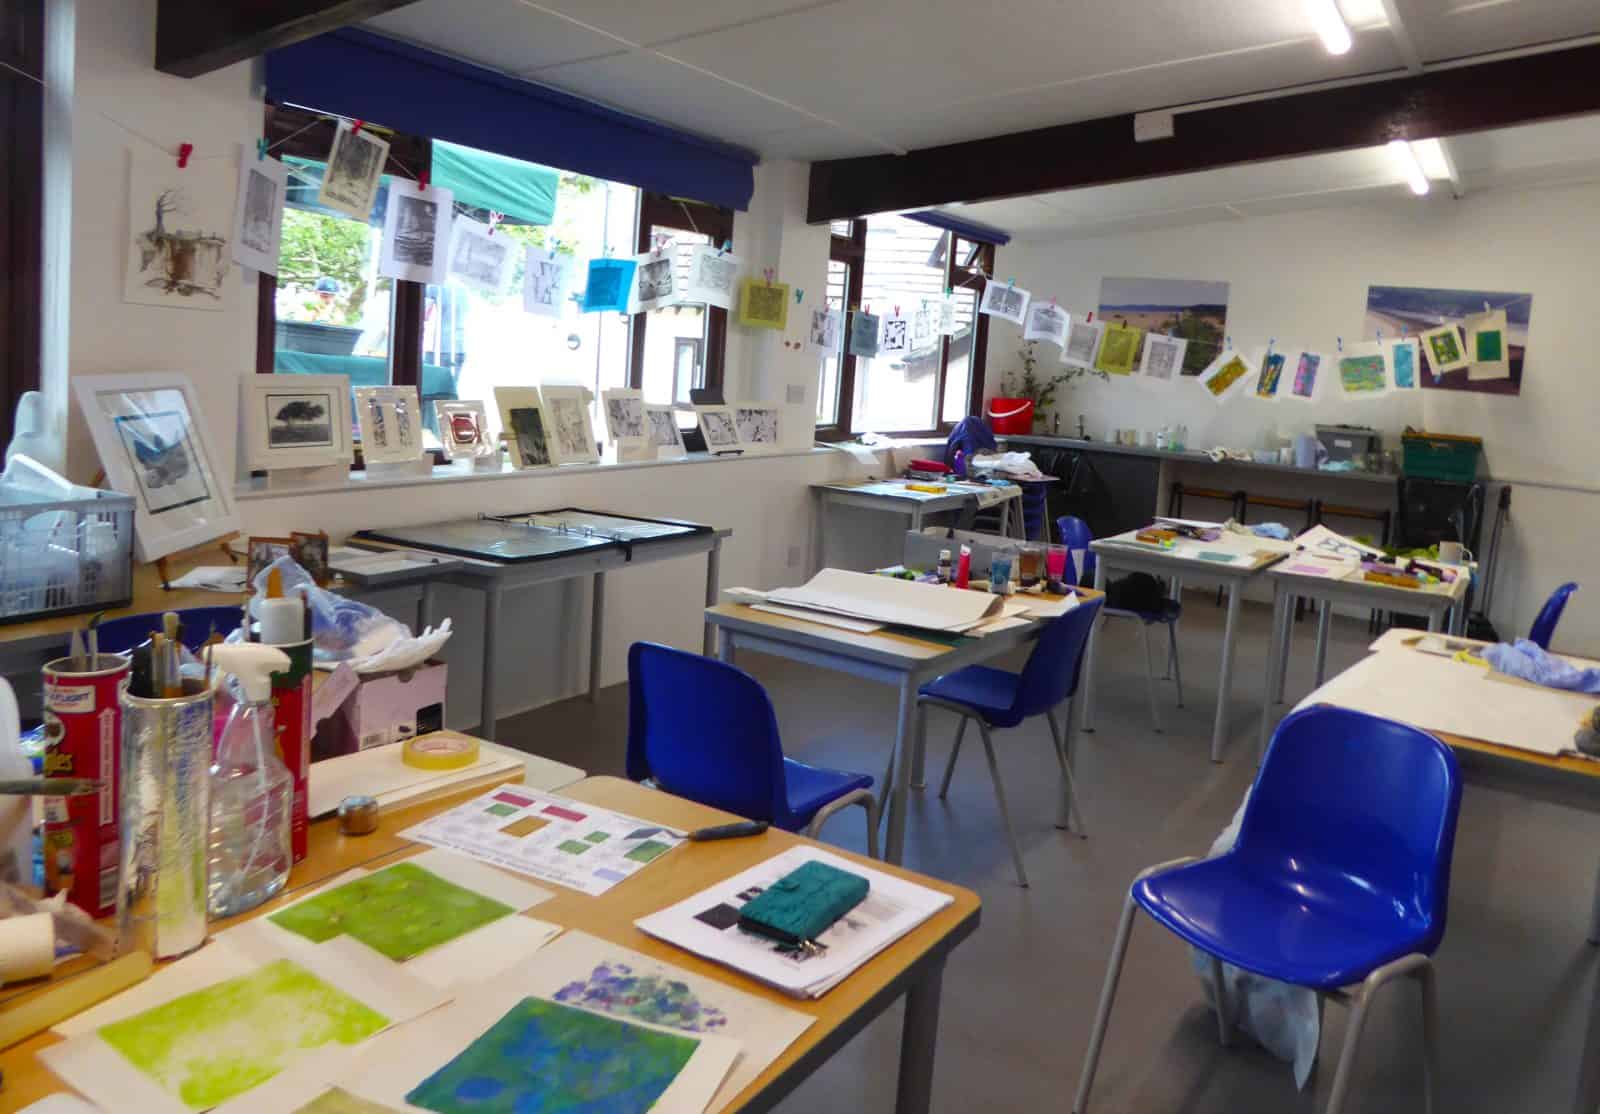 slapton classroom with artwork